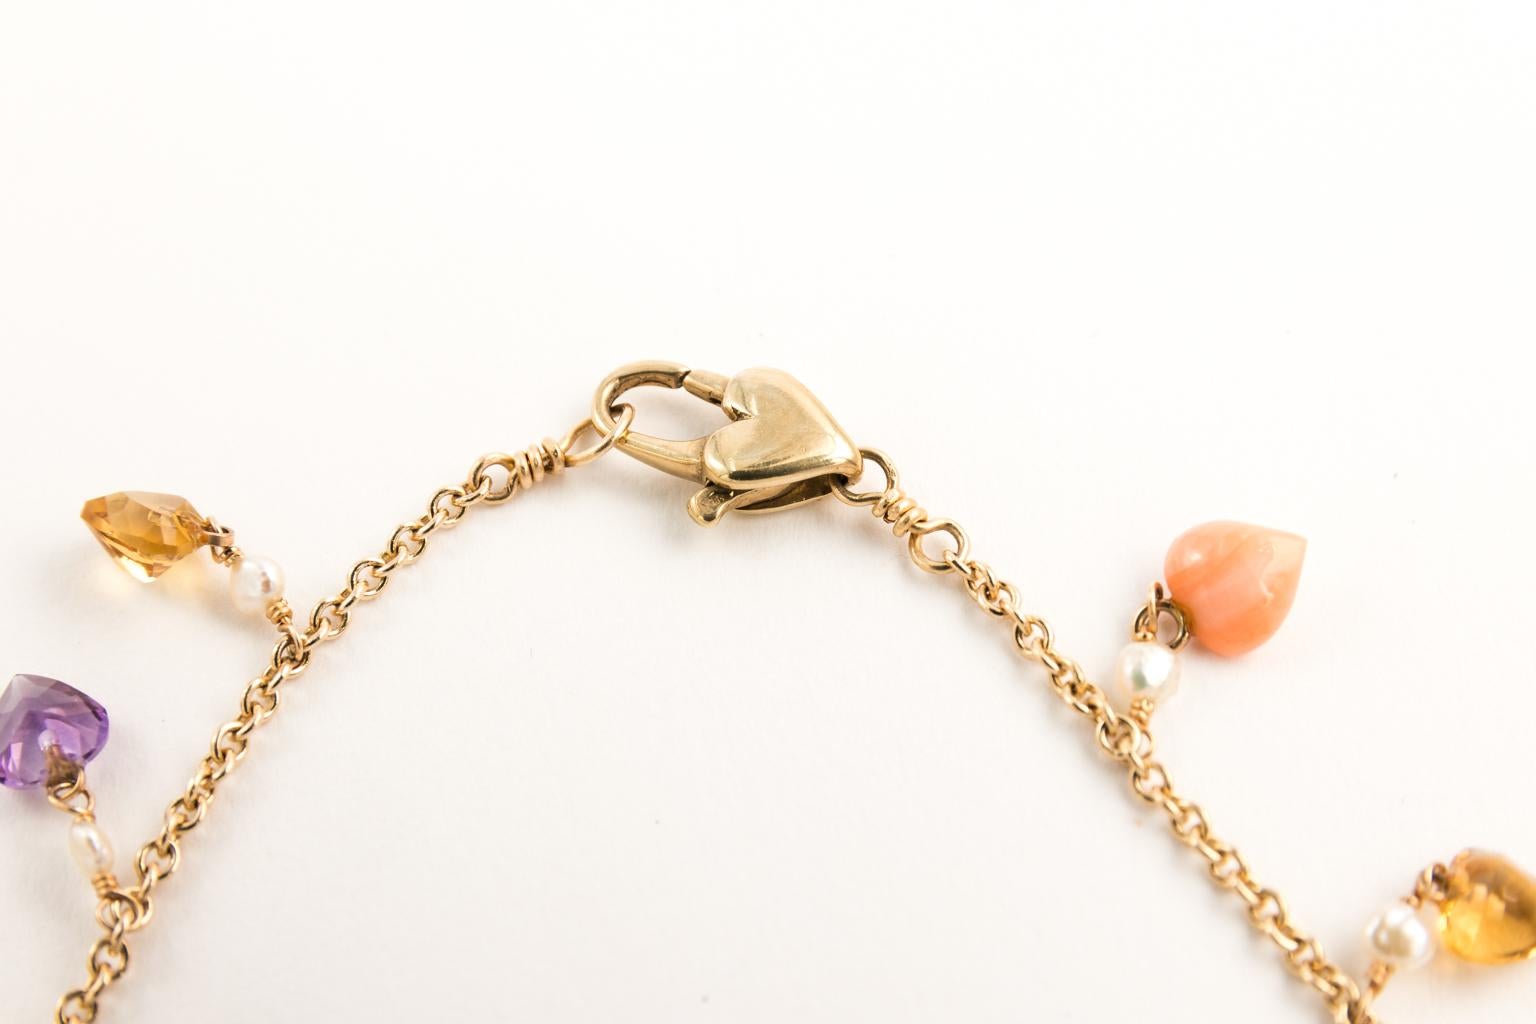 14 Karat Yellow Gold Keshi Pearl and 37 semi-precious heart shaped stone necklace in multi colors.
